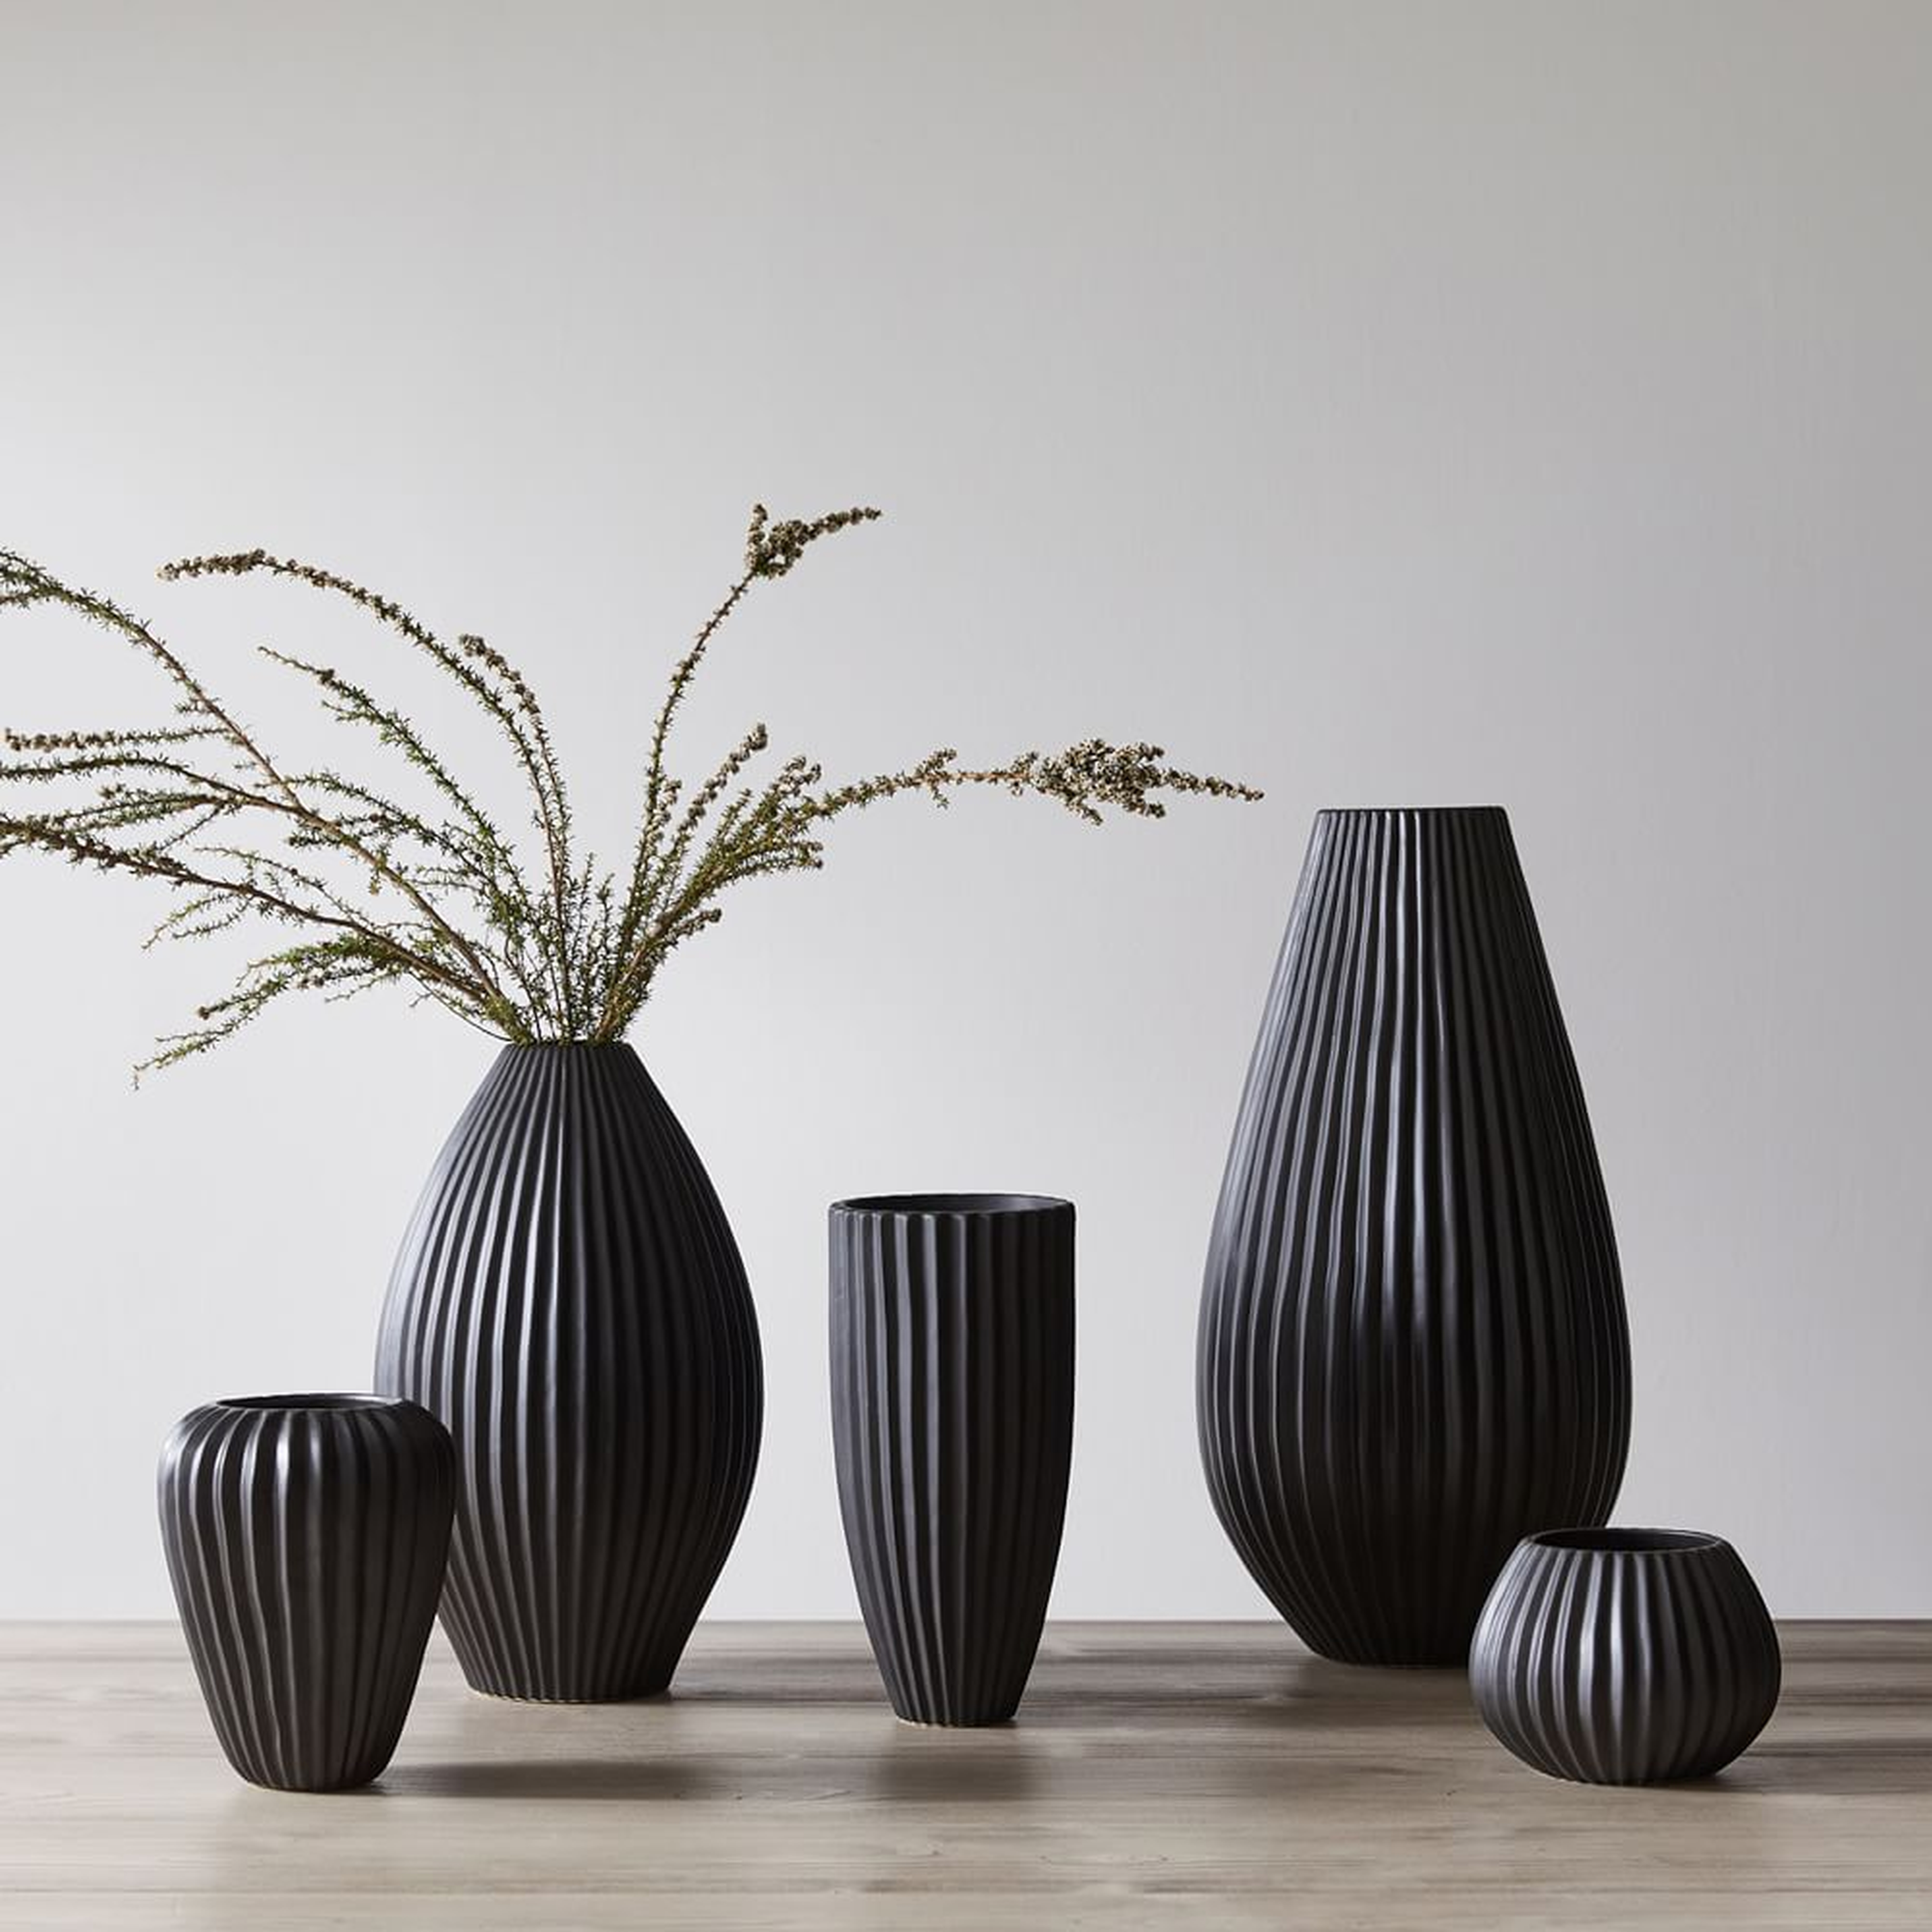 Sanibel Textured Vases Black, Set of 5 - West Elm